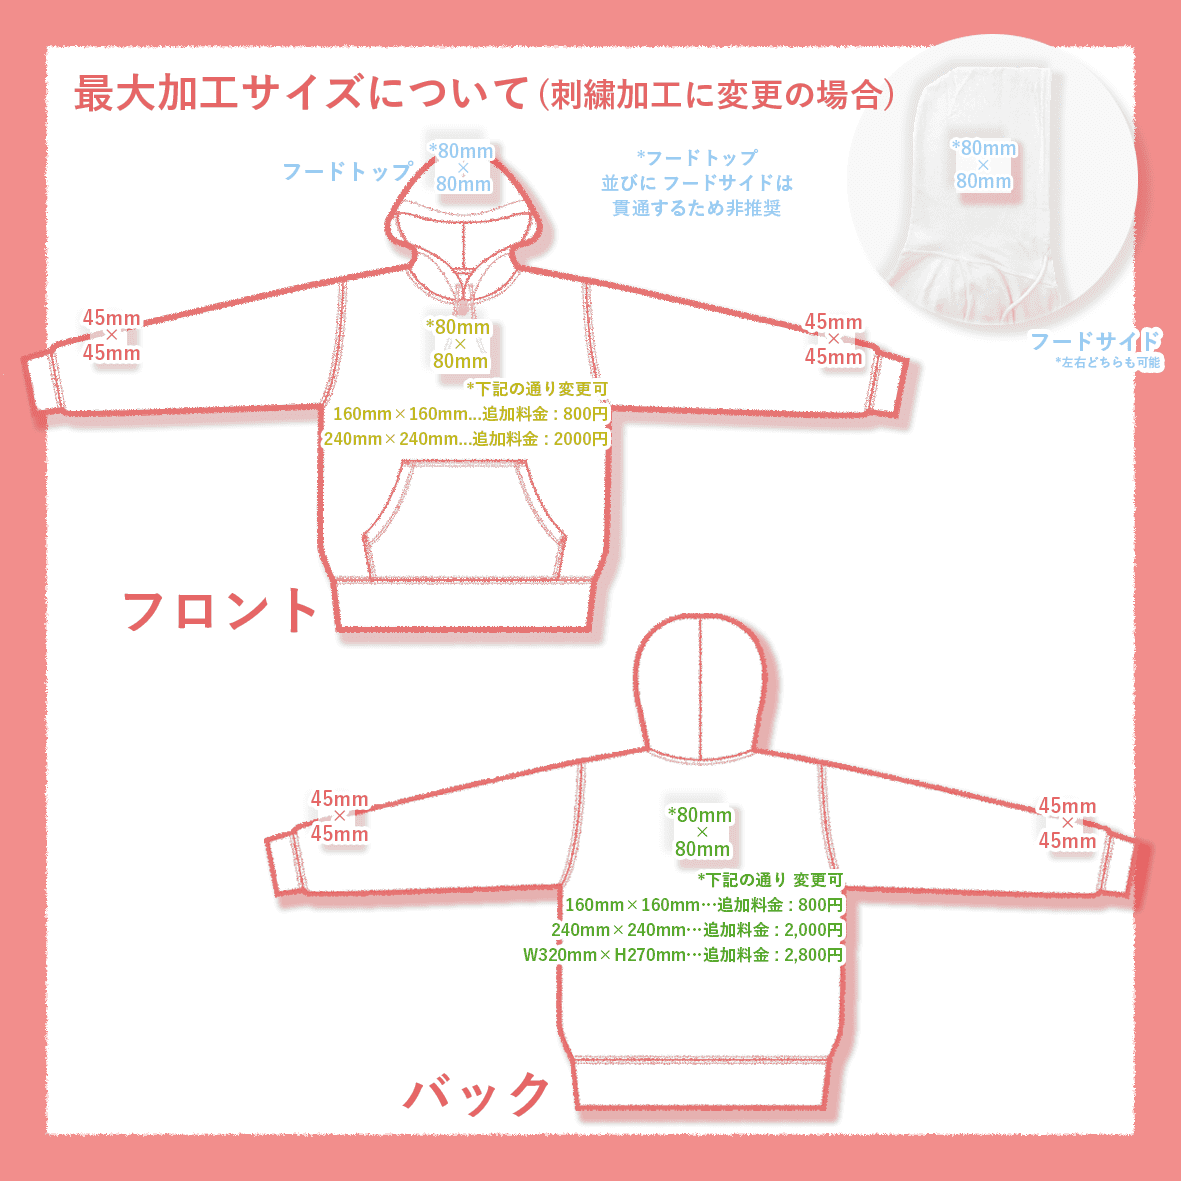 BAYSIDE ベイサイド 16.0 oz Super Heavy Oversized Hooded Sweatshirt (品番B4000US)